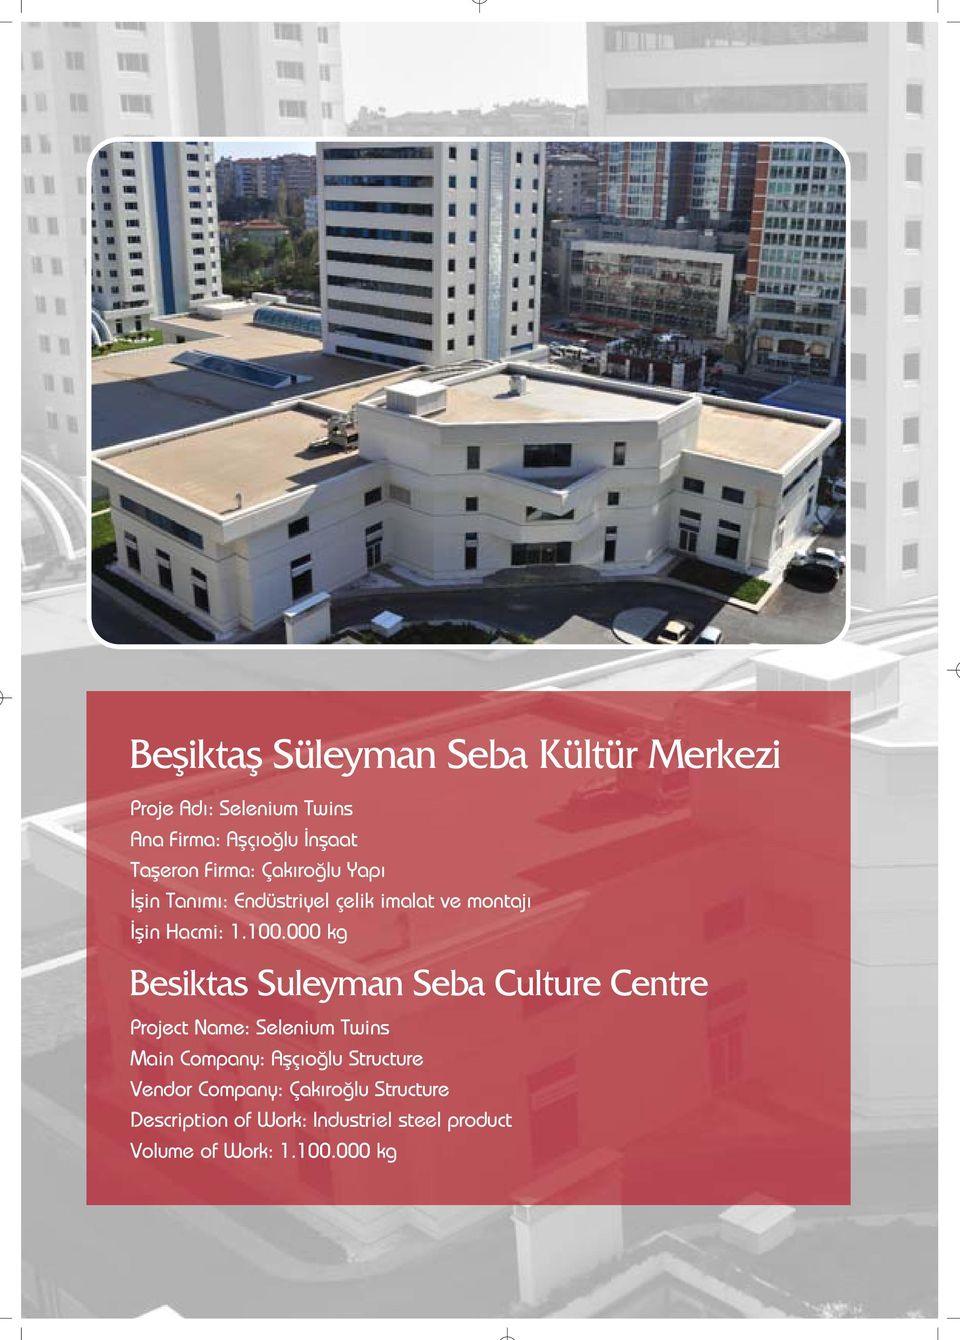 000 kg Besiktas Suleyman Seba Culture Centre Project Name: Selenium Twins Main Company: Aflç o lu